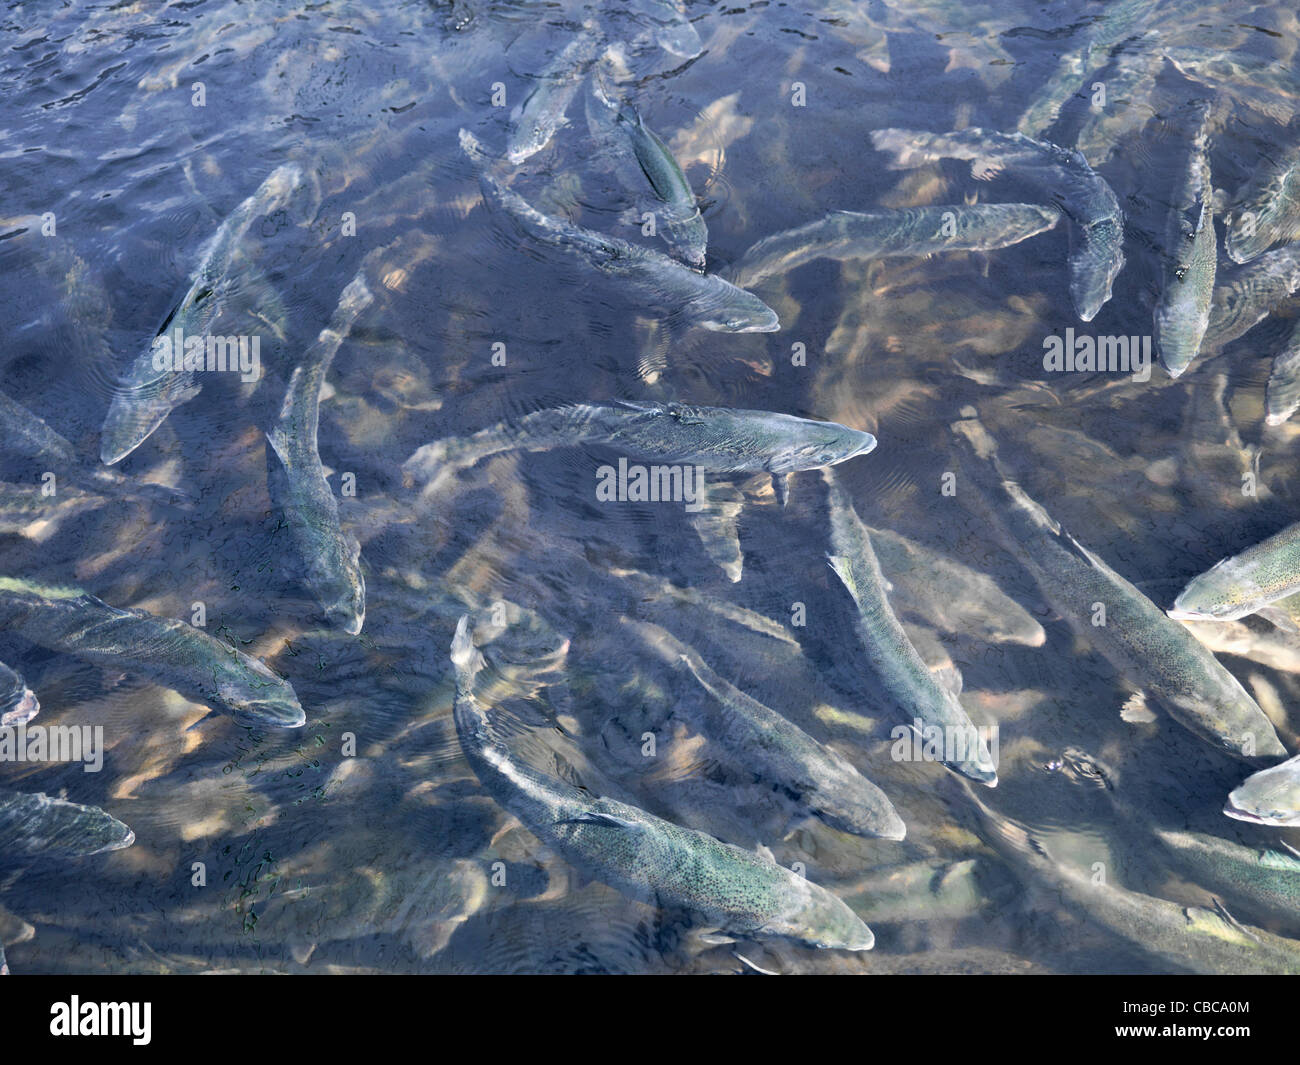 Salmon swimming in pen Stock Photo